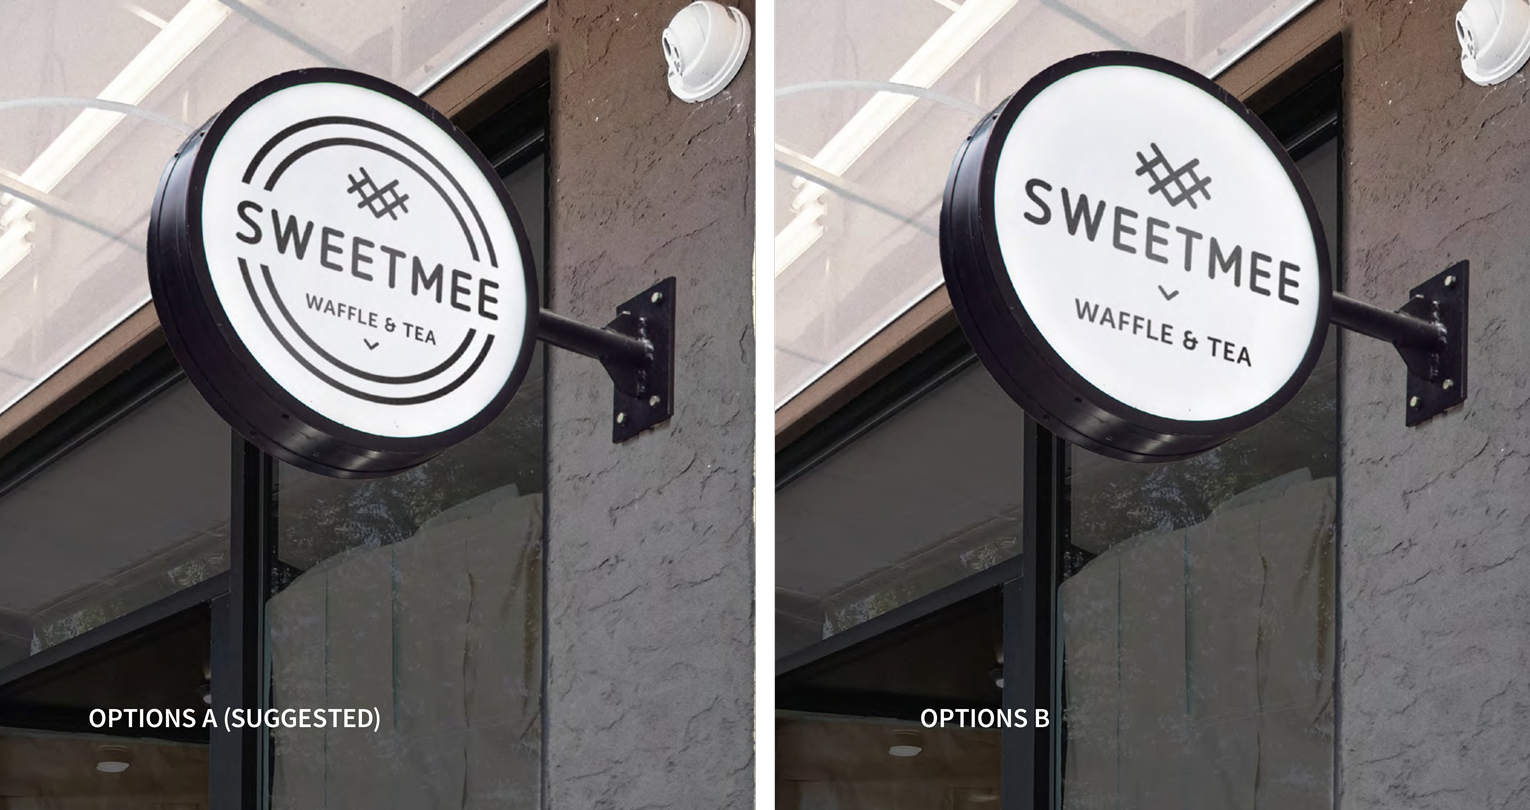  Sweet Mee Signage Options